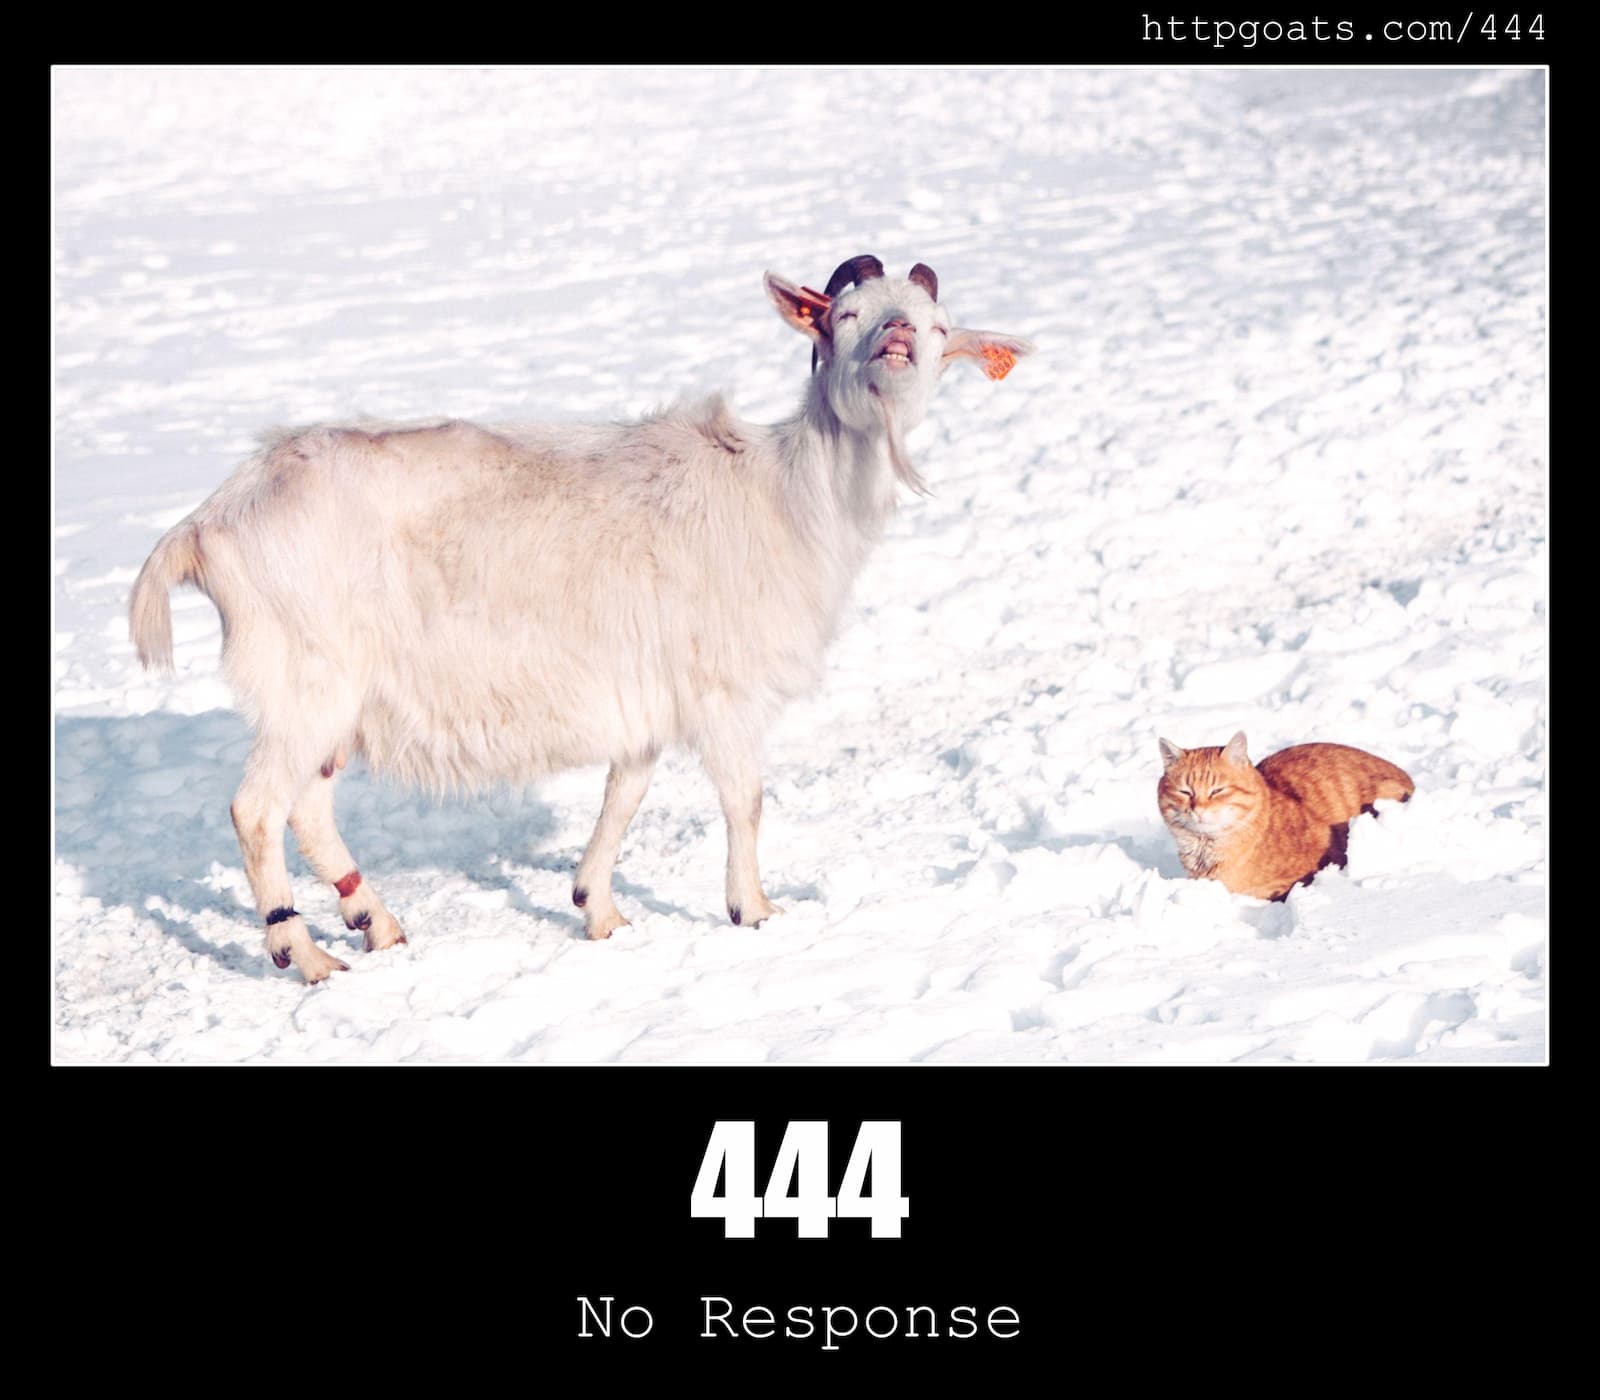 HTTP Status Code 444 No Response & Goats